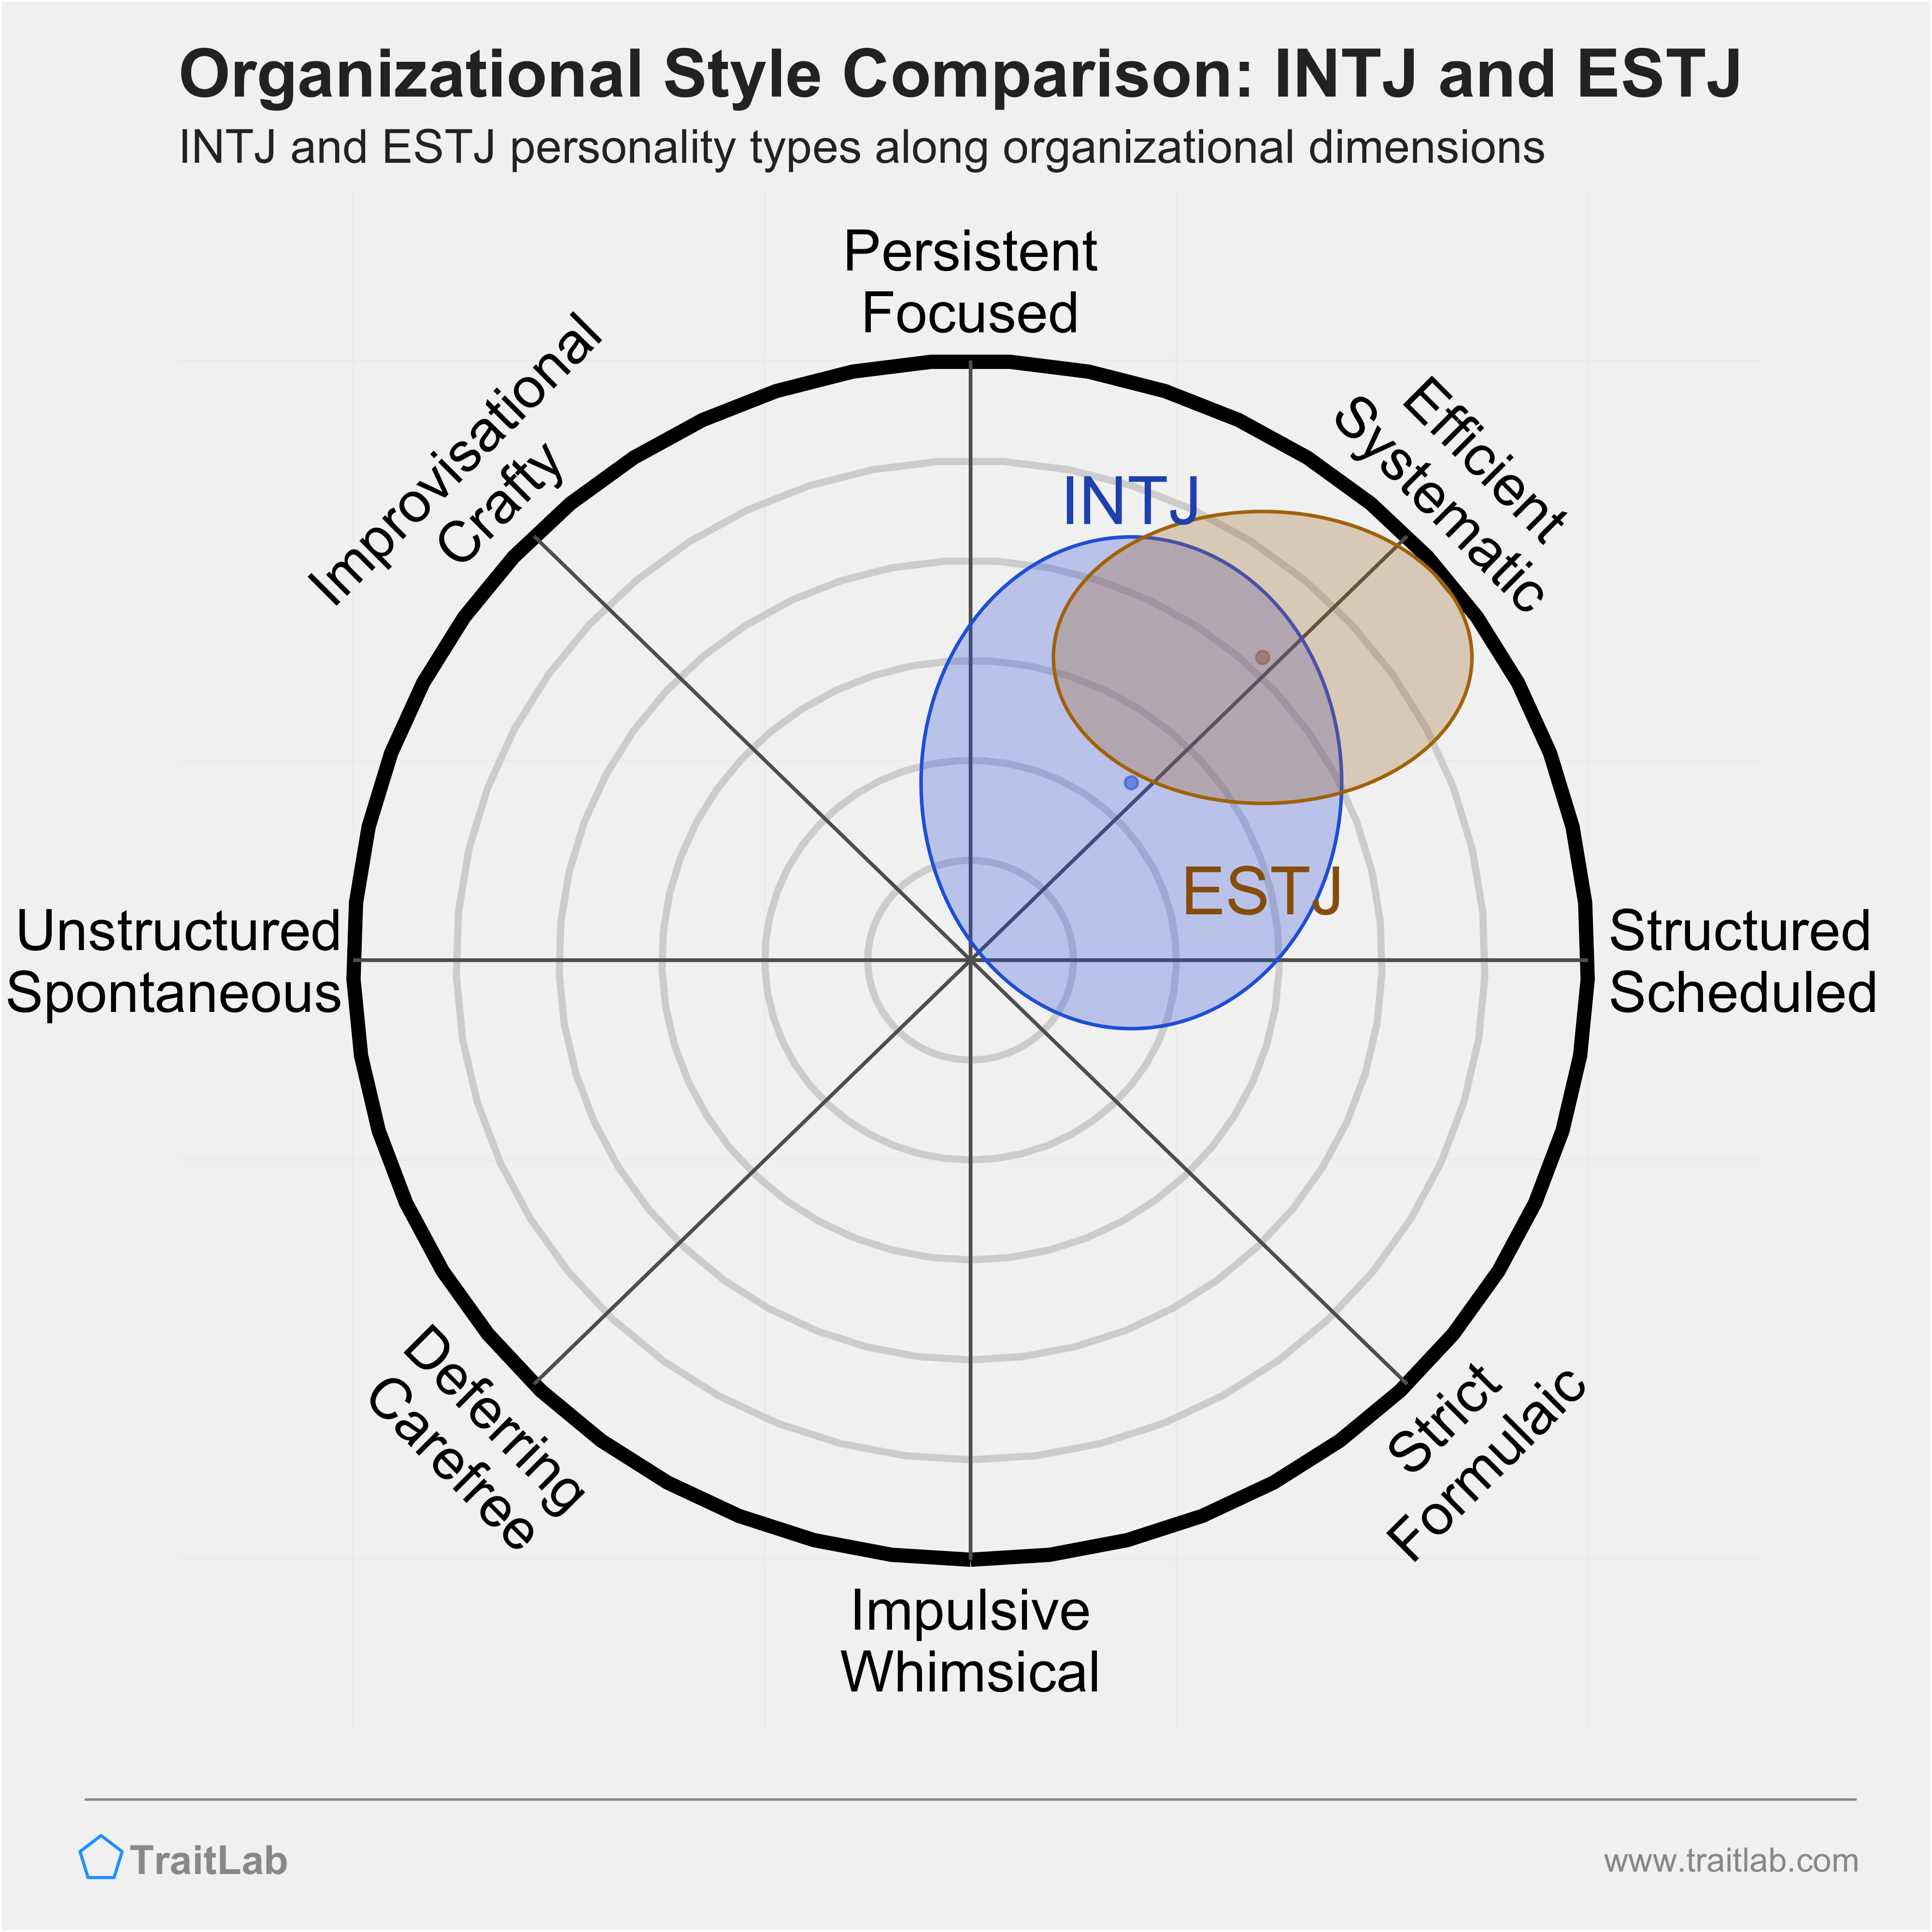 INTJ and ESTJ comparison across organizational dimensions